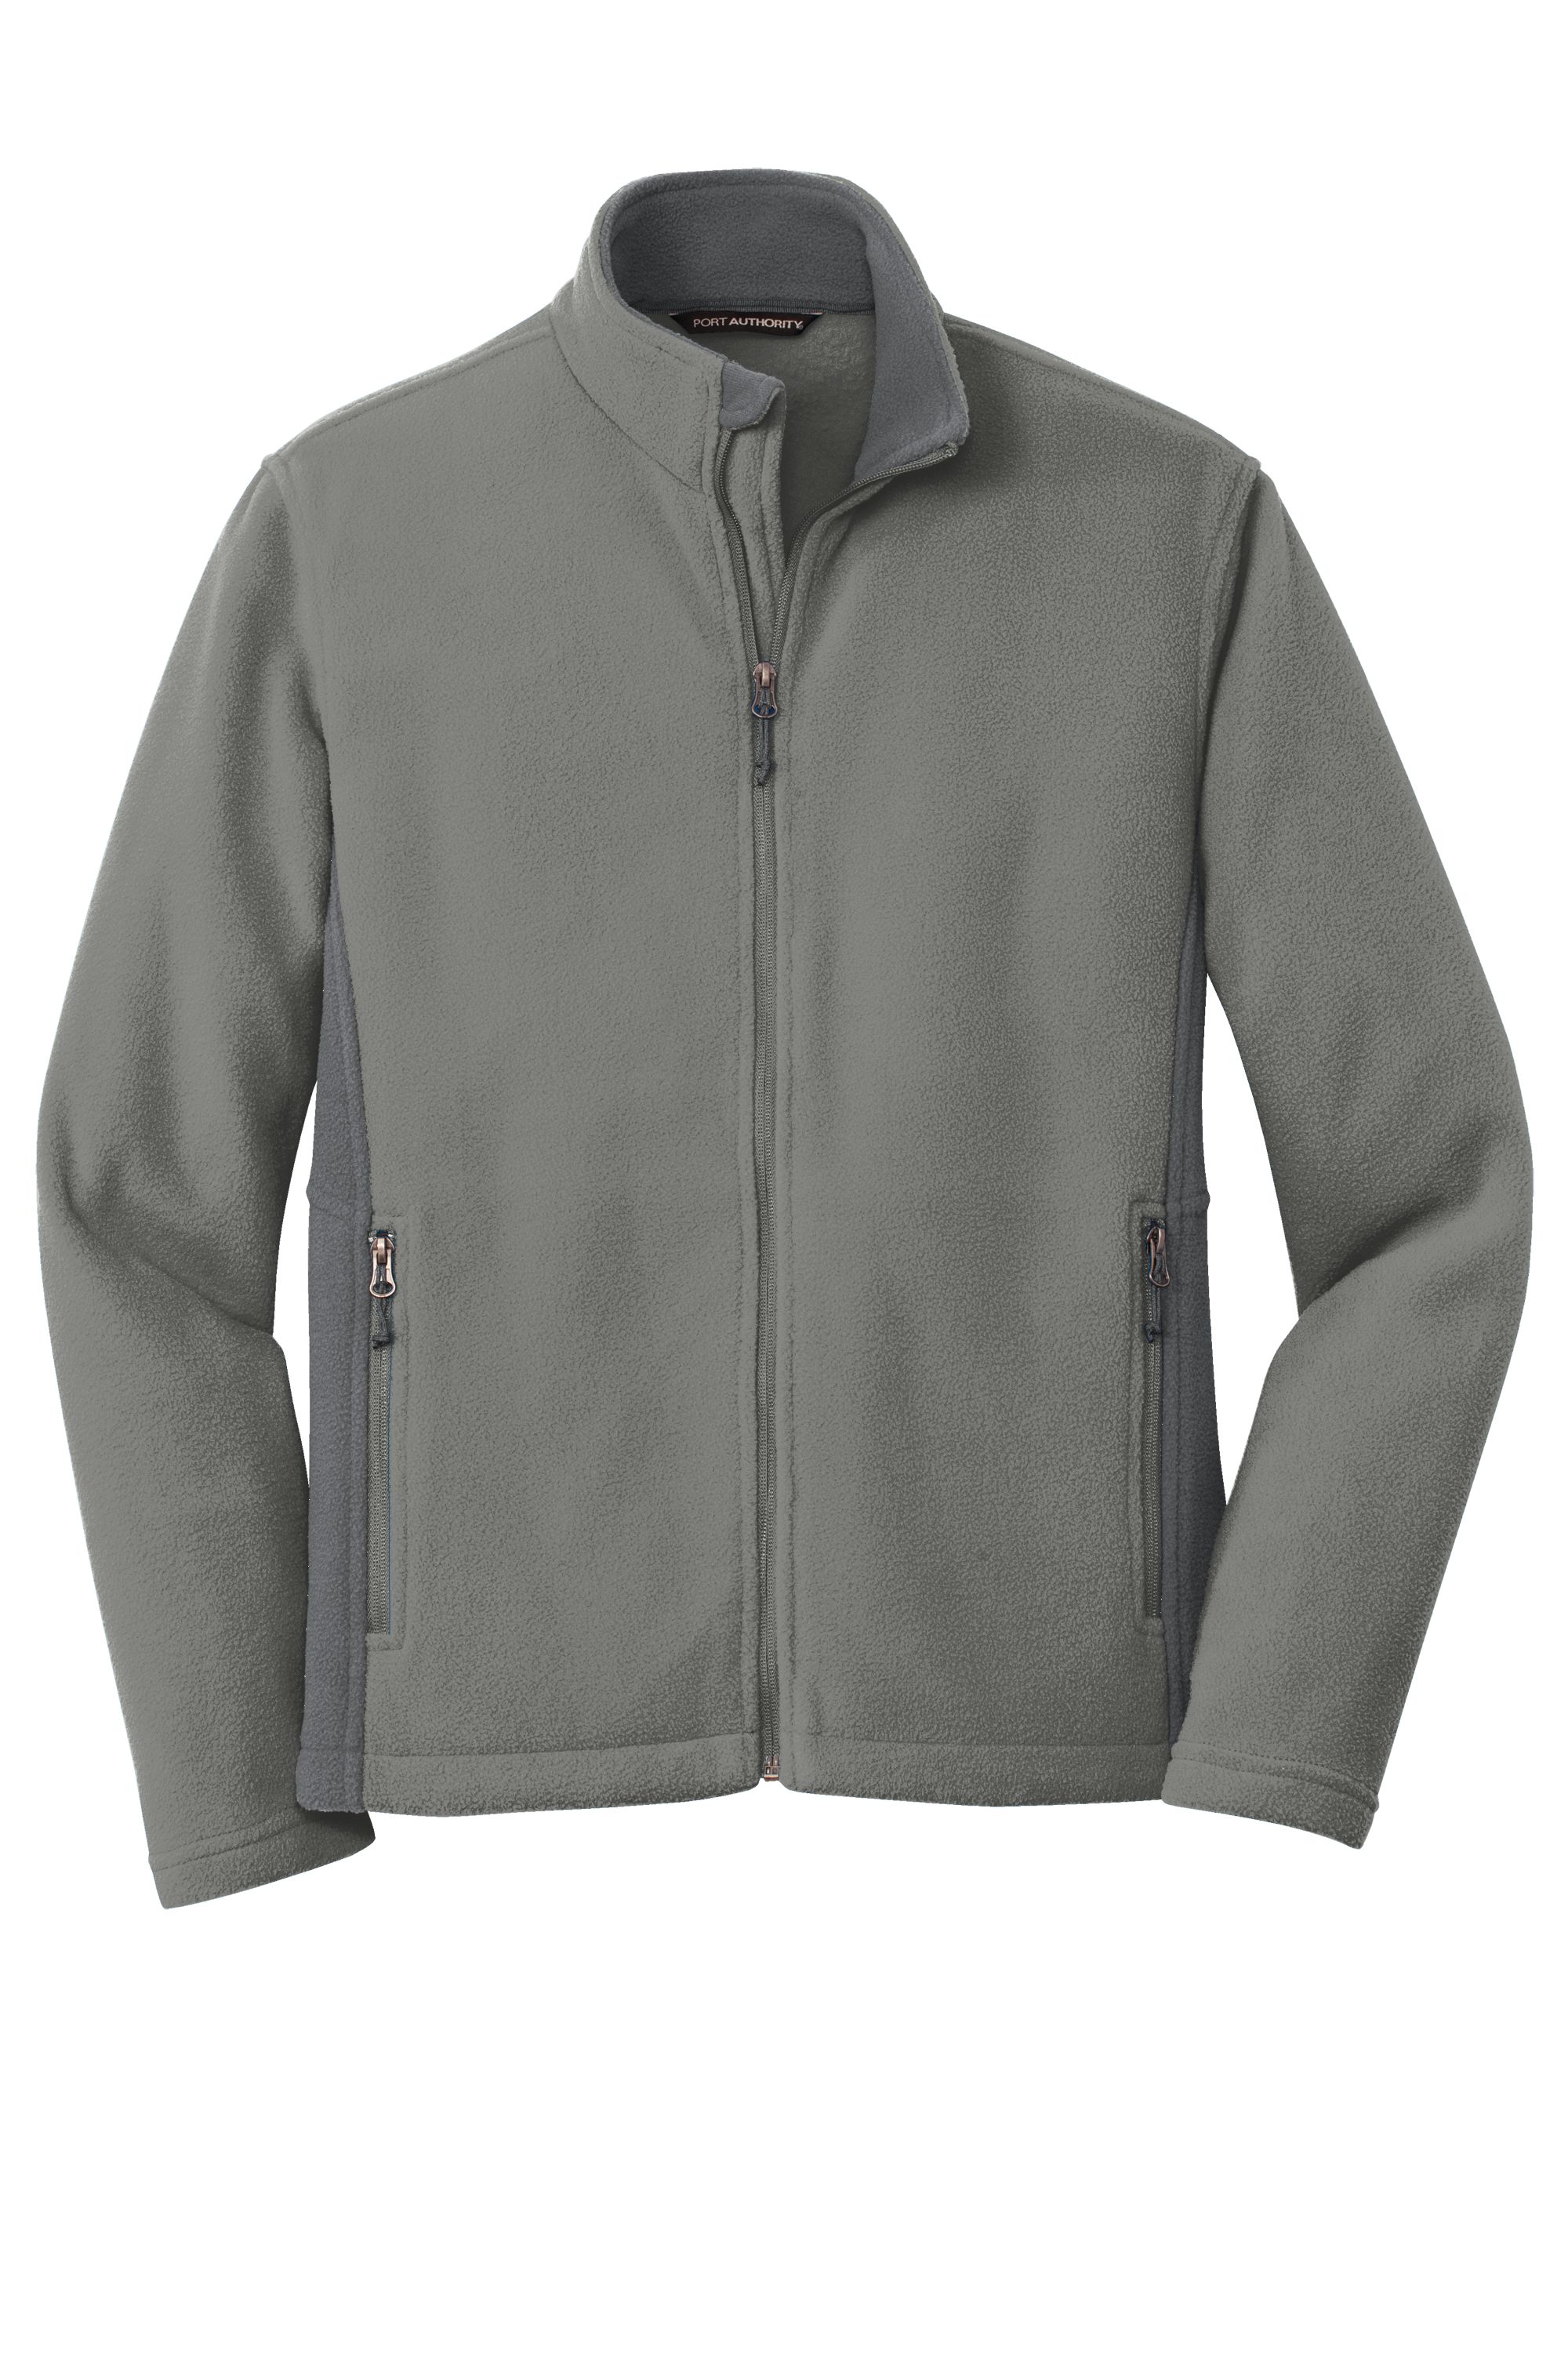 WWMS Port Authority Full Zip Fleece Jacket (F217)